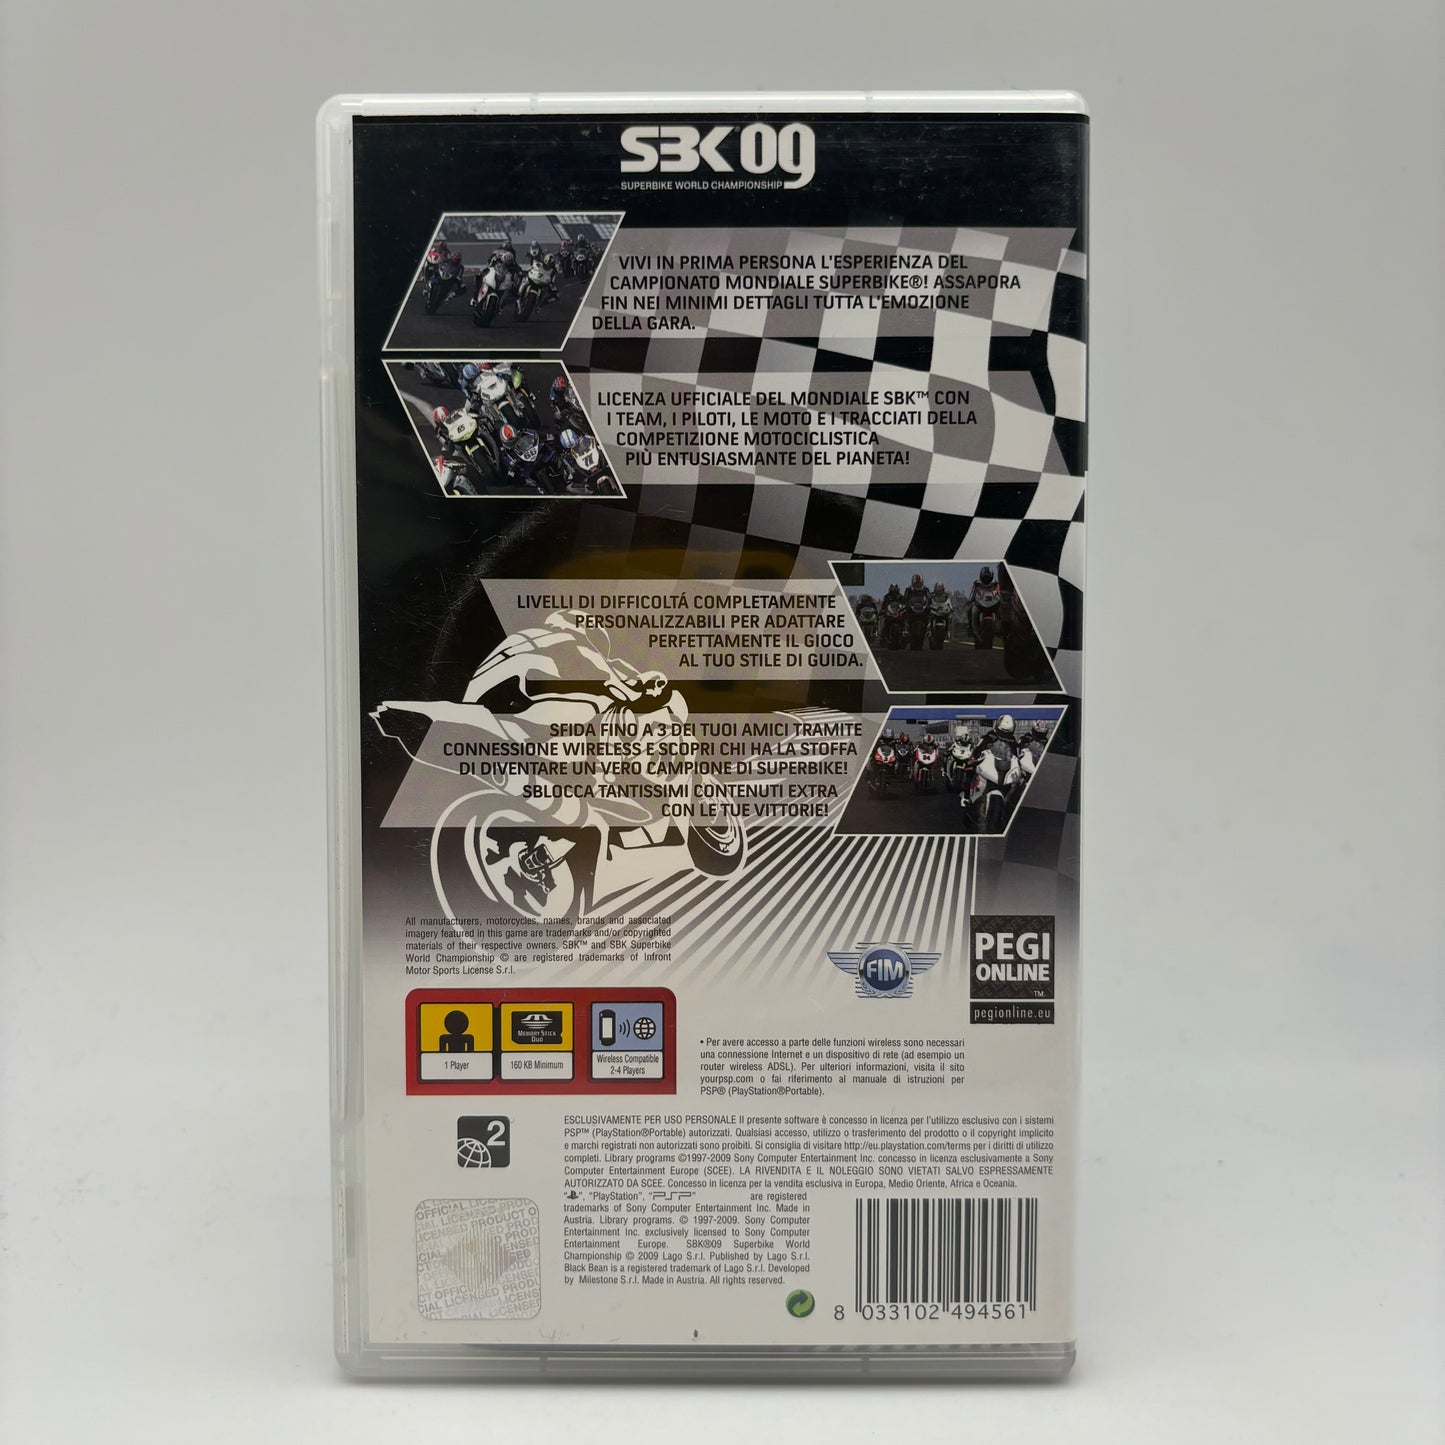 SBK 09 superbike world championship Sony PSP PAL ITA (USATO)